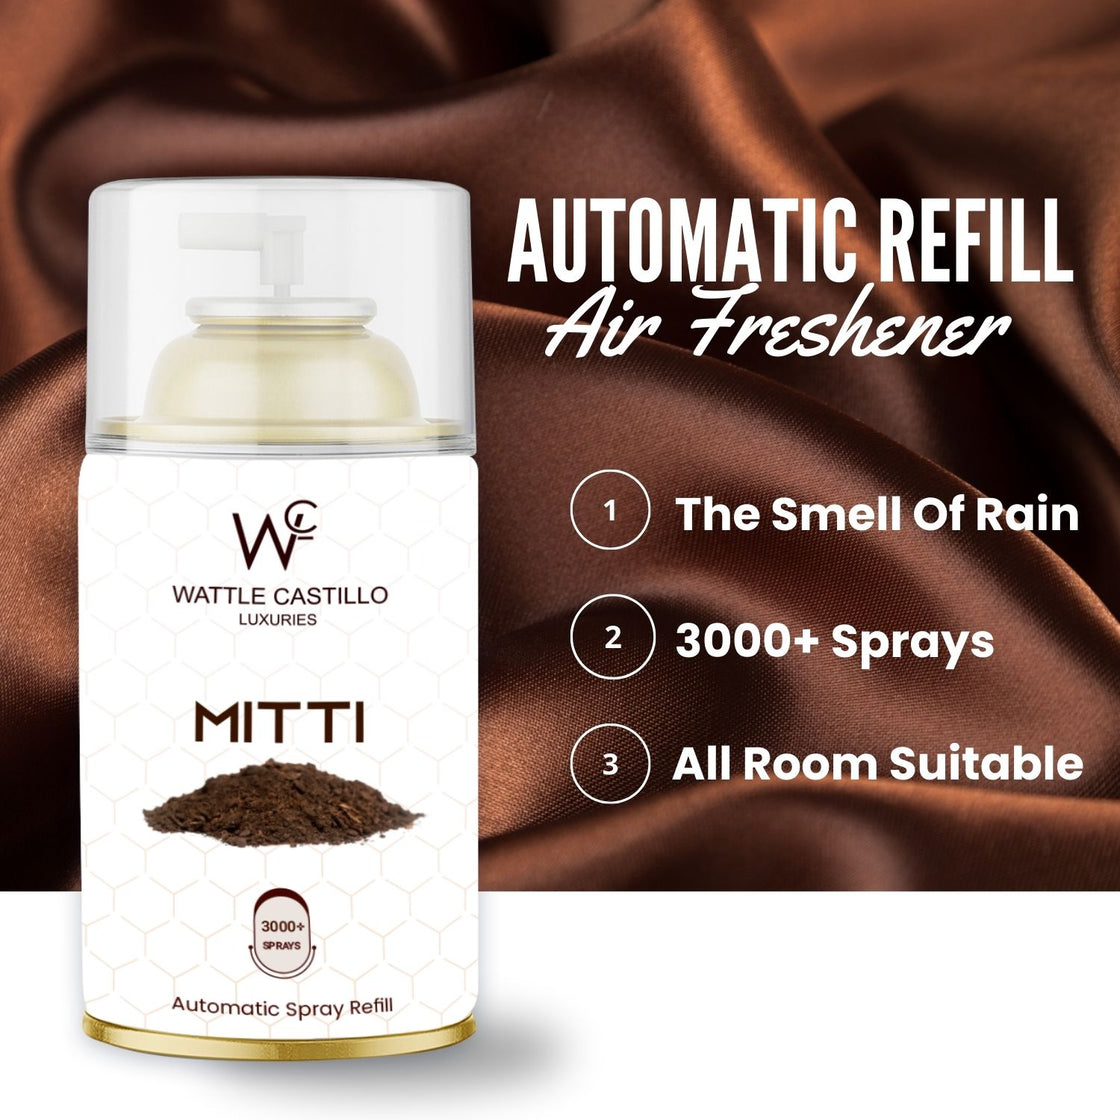 Wattle Castillo Rainy Mitti Automatic Room Fresheners Refill (265ml) & 3000+ Sprays Guaranteed Lasts up to 80 days